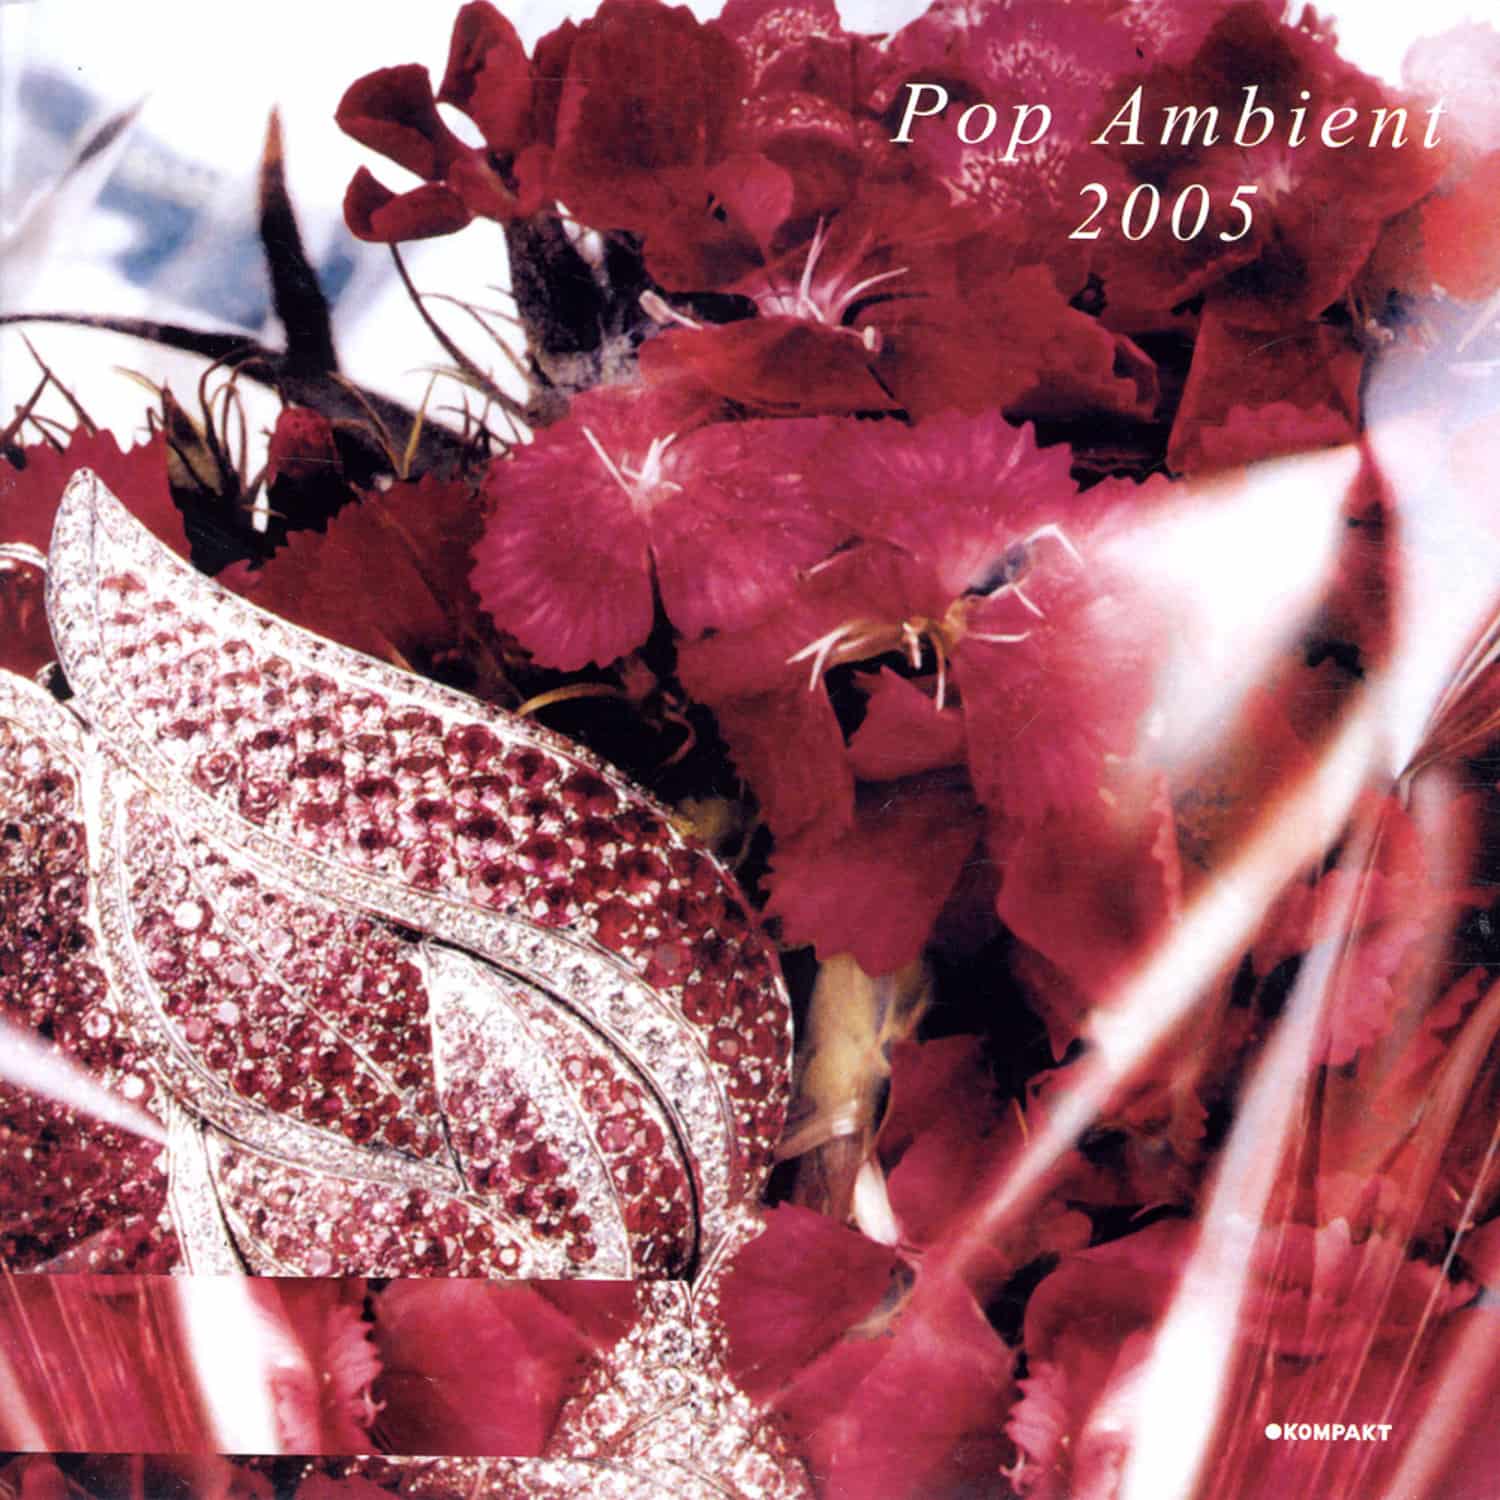 Kompakt - Pop Ambient 2005 